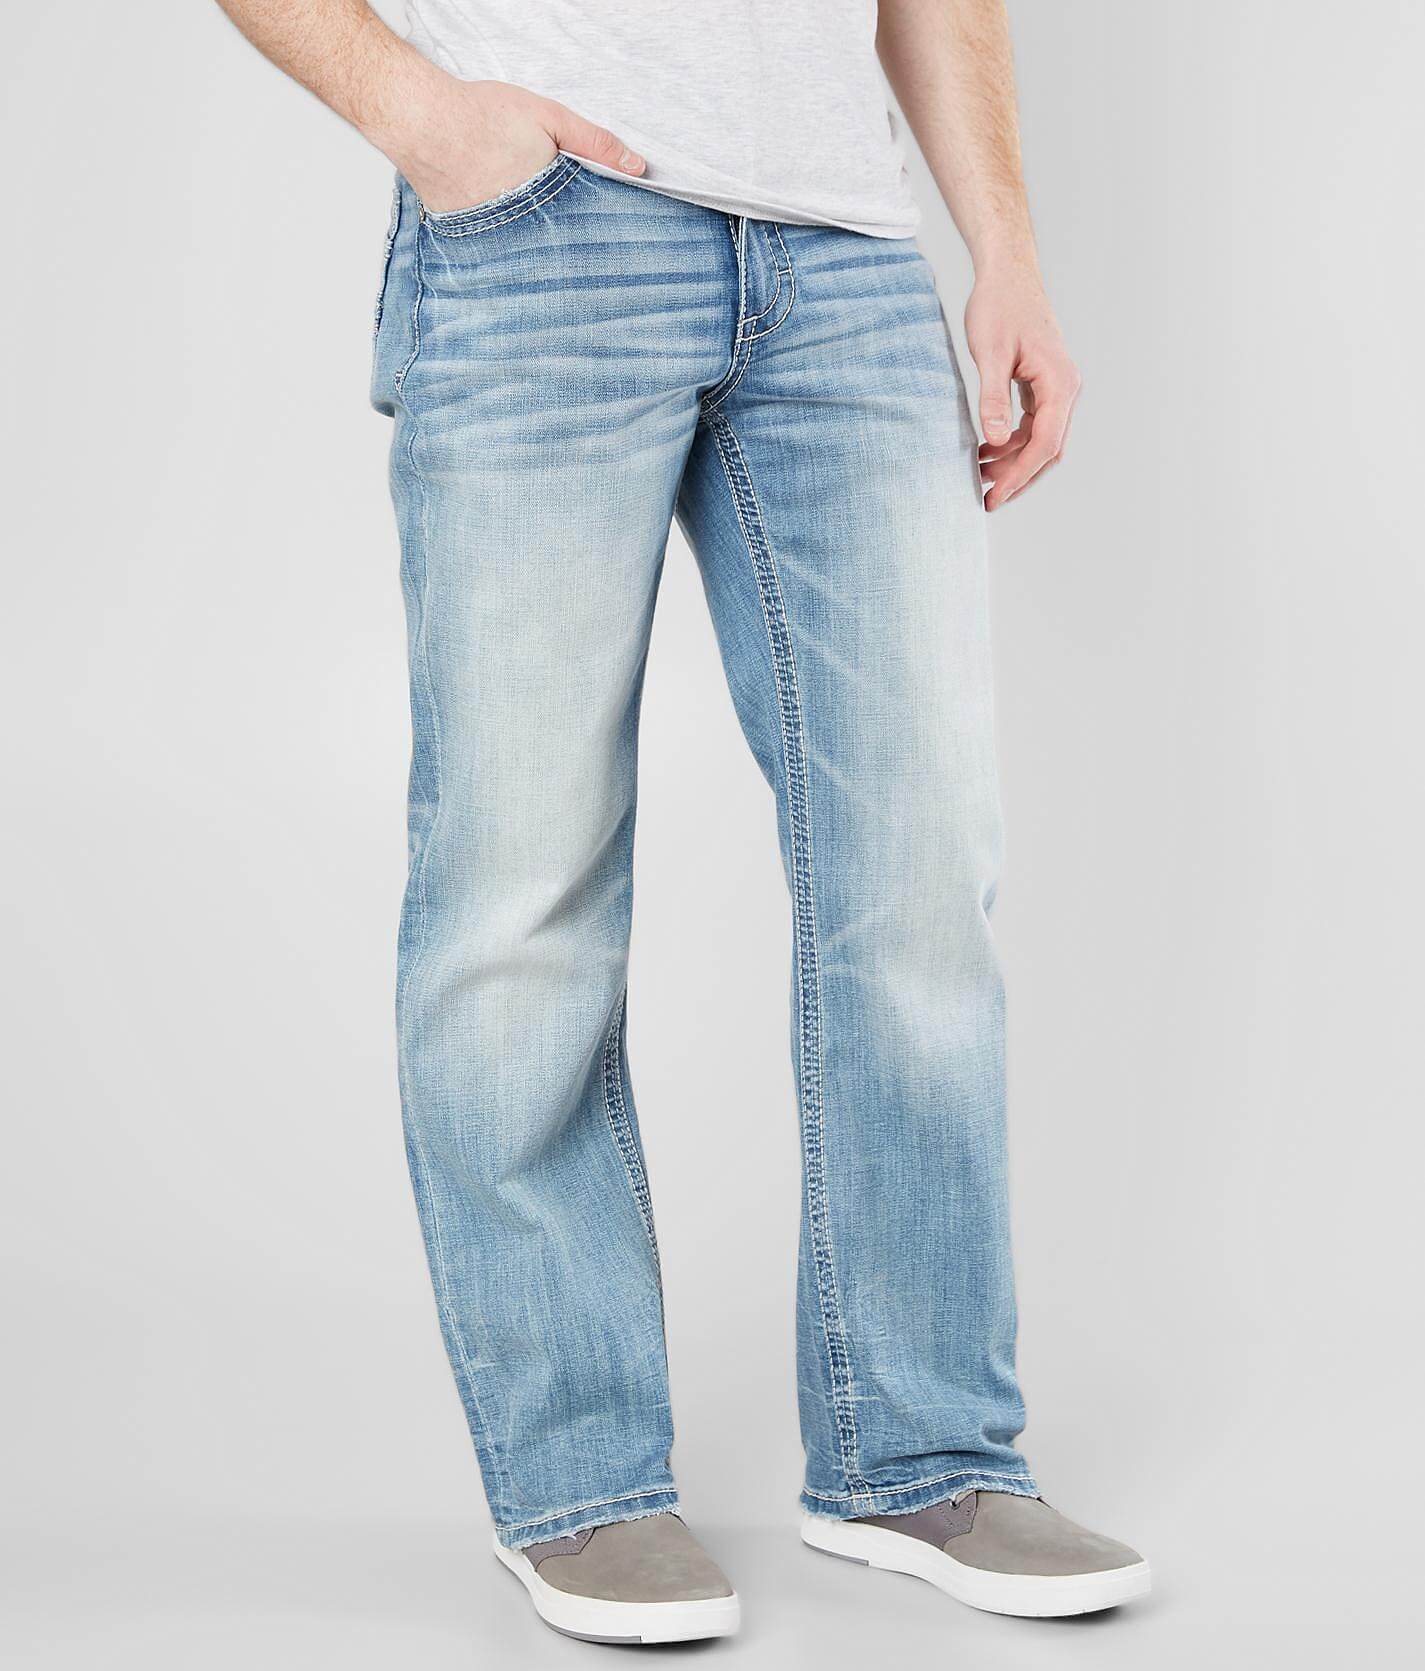 bke tyler jeans cheap